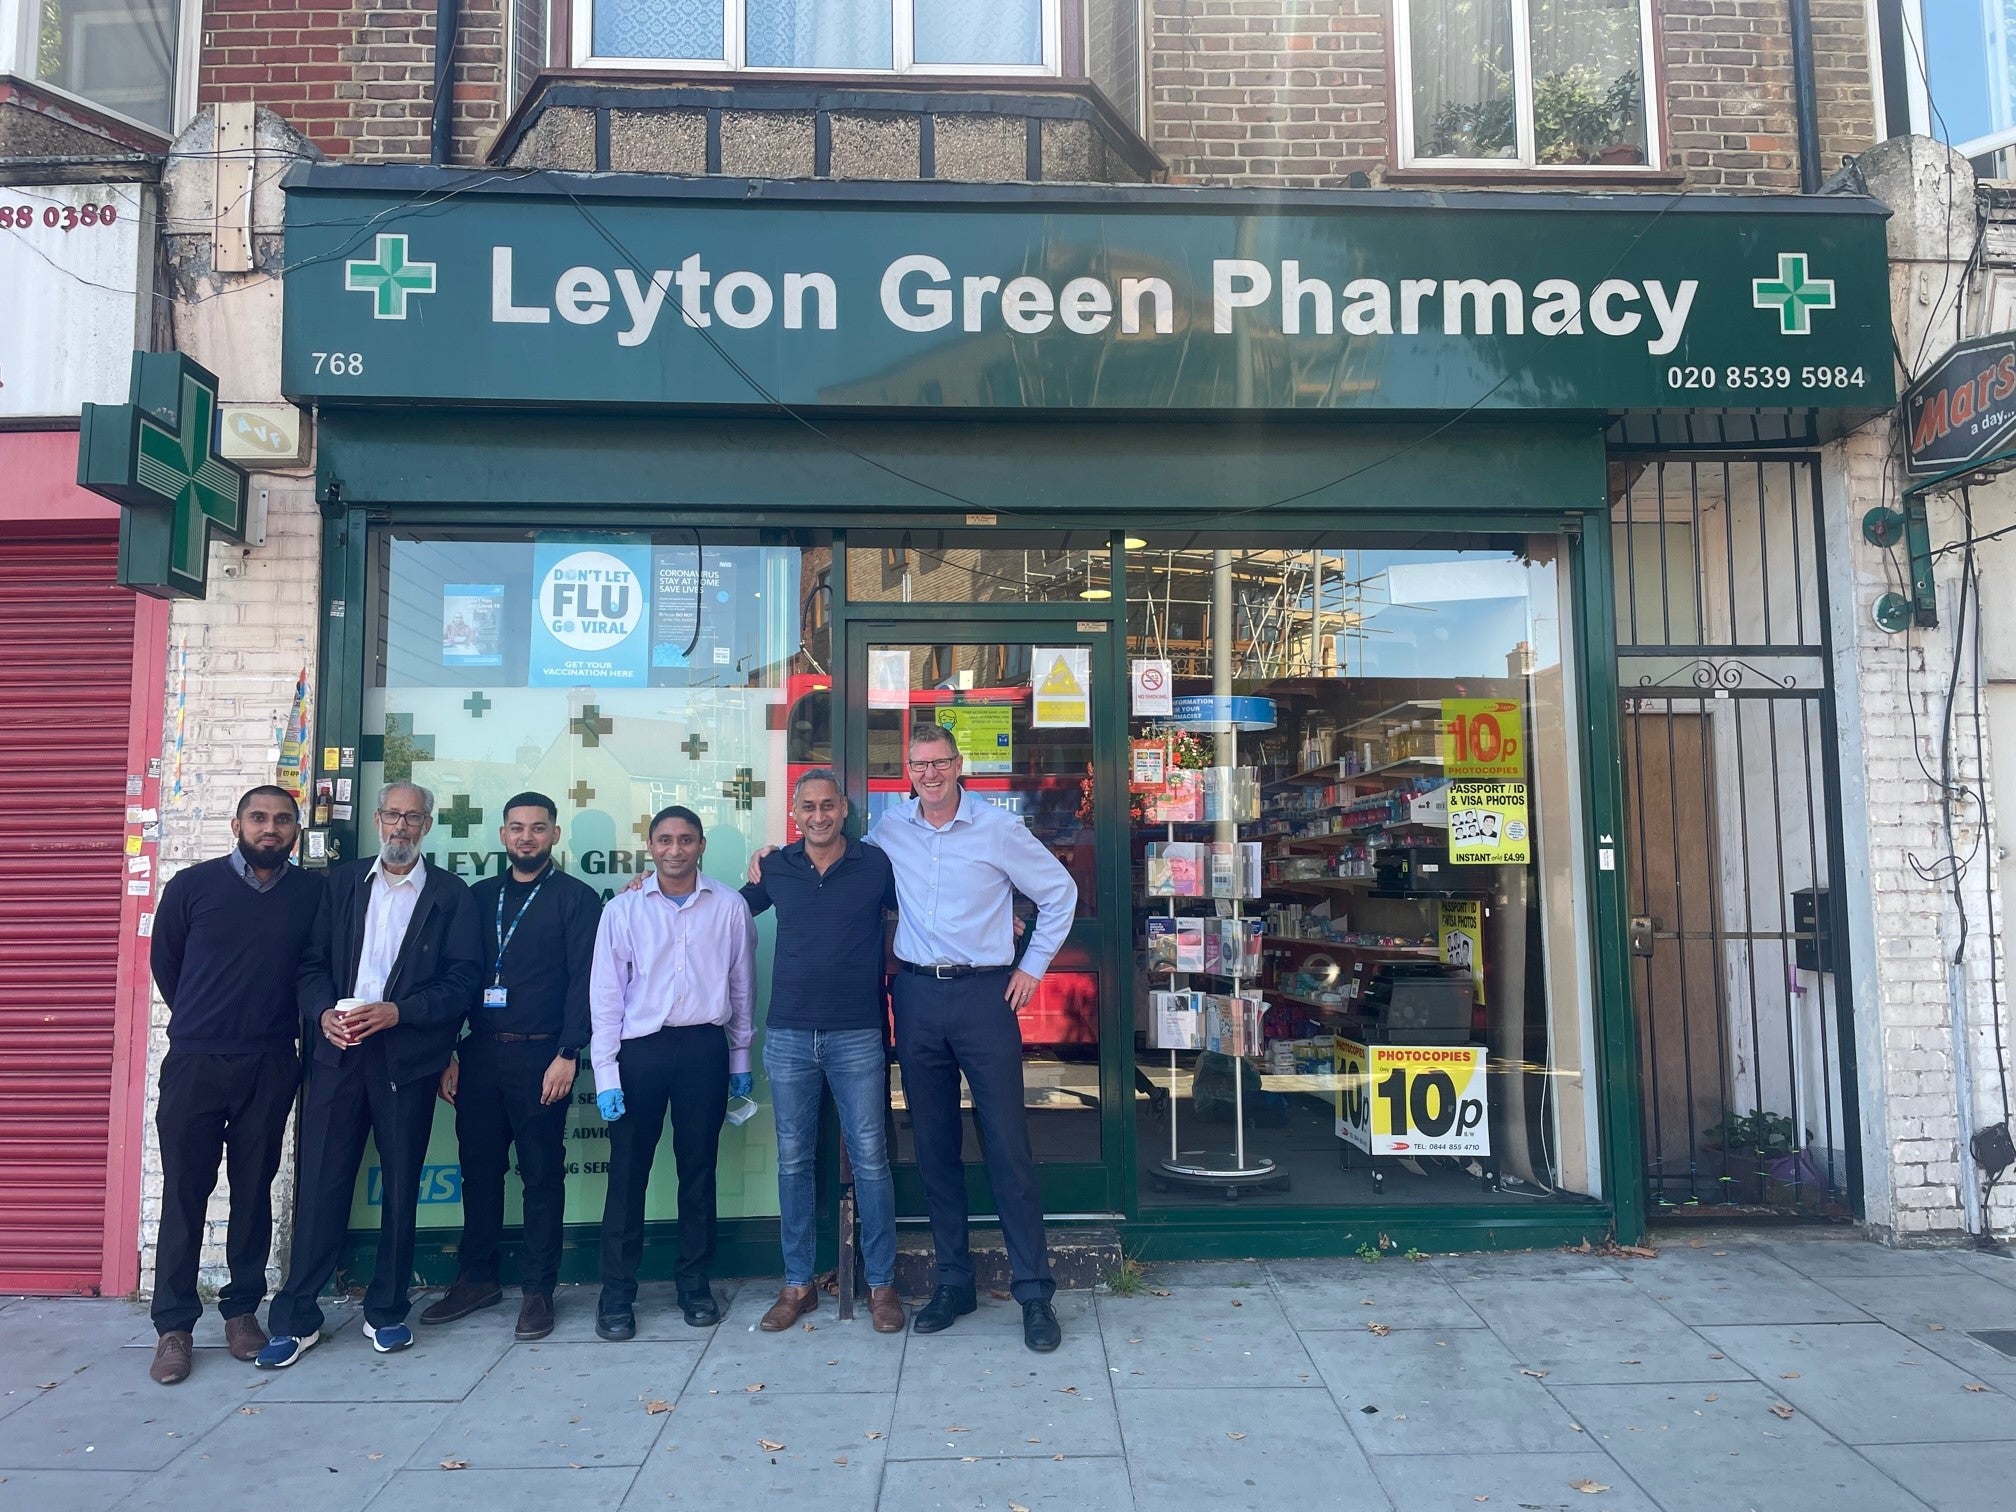 Leyton Green Pharmacy in Walthamstow, London